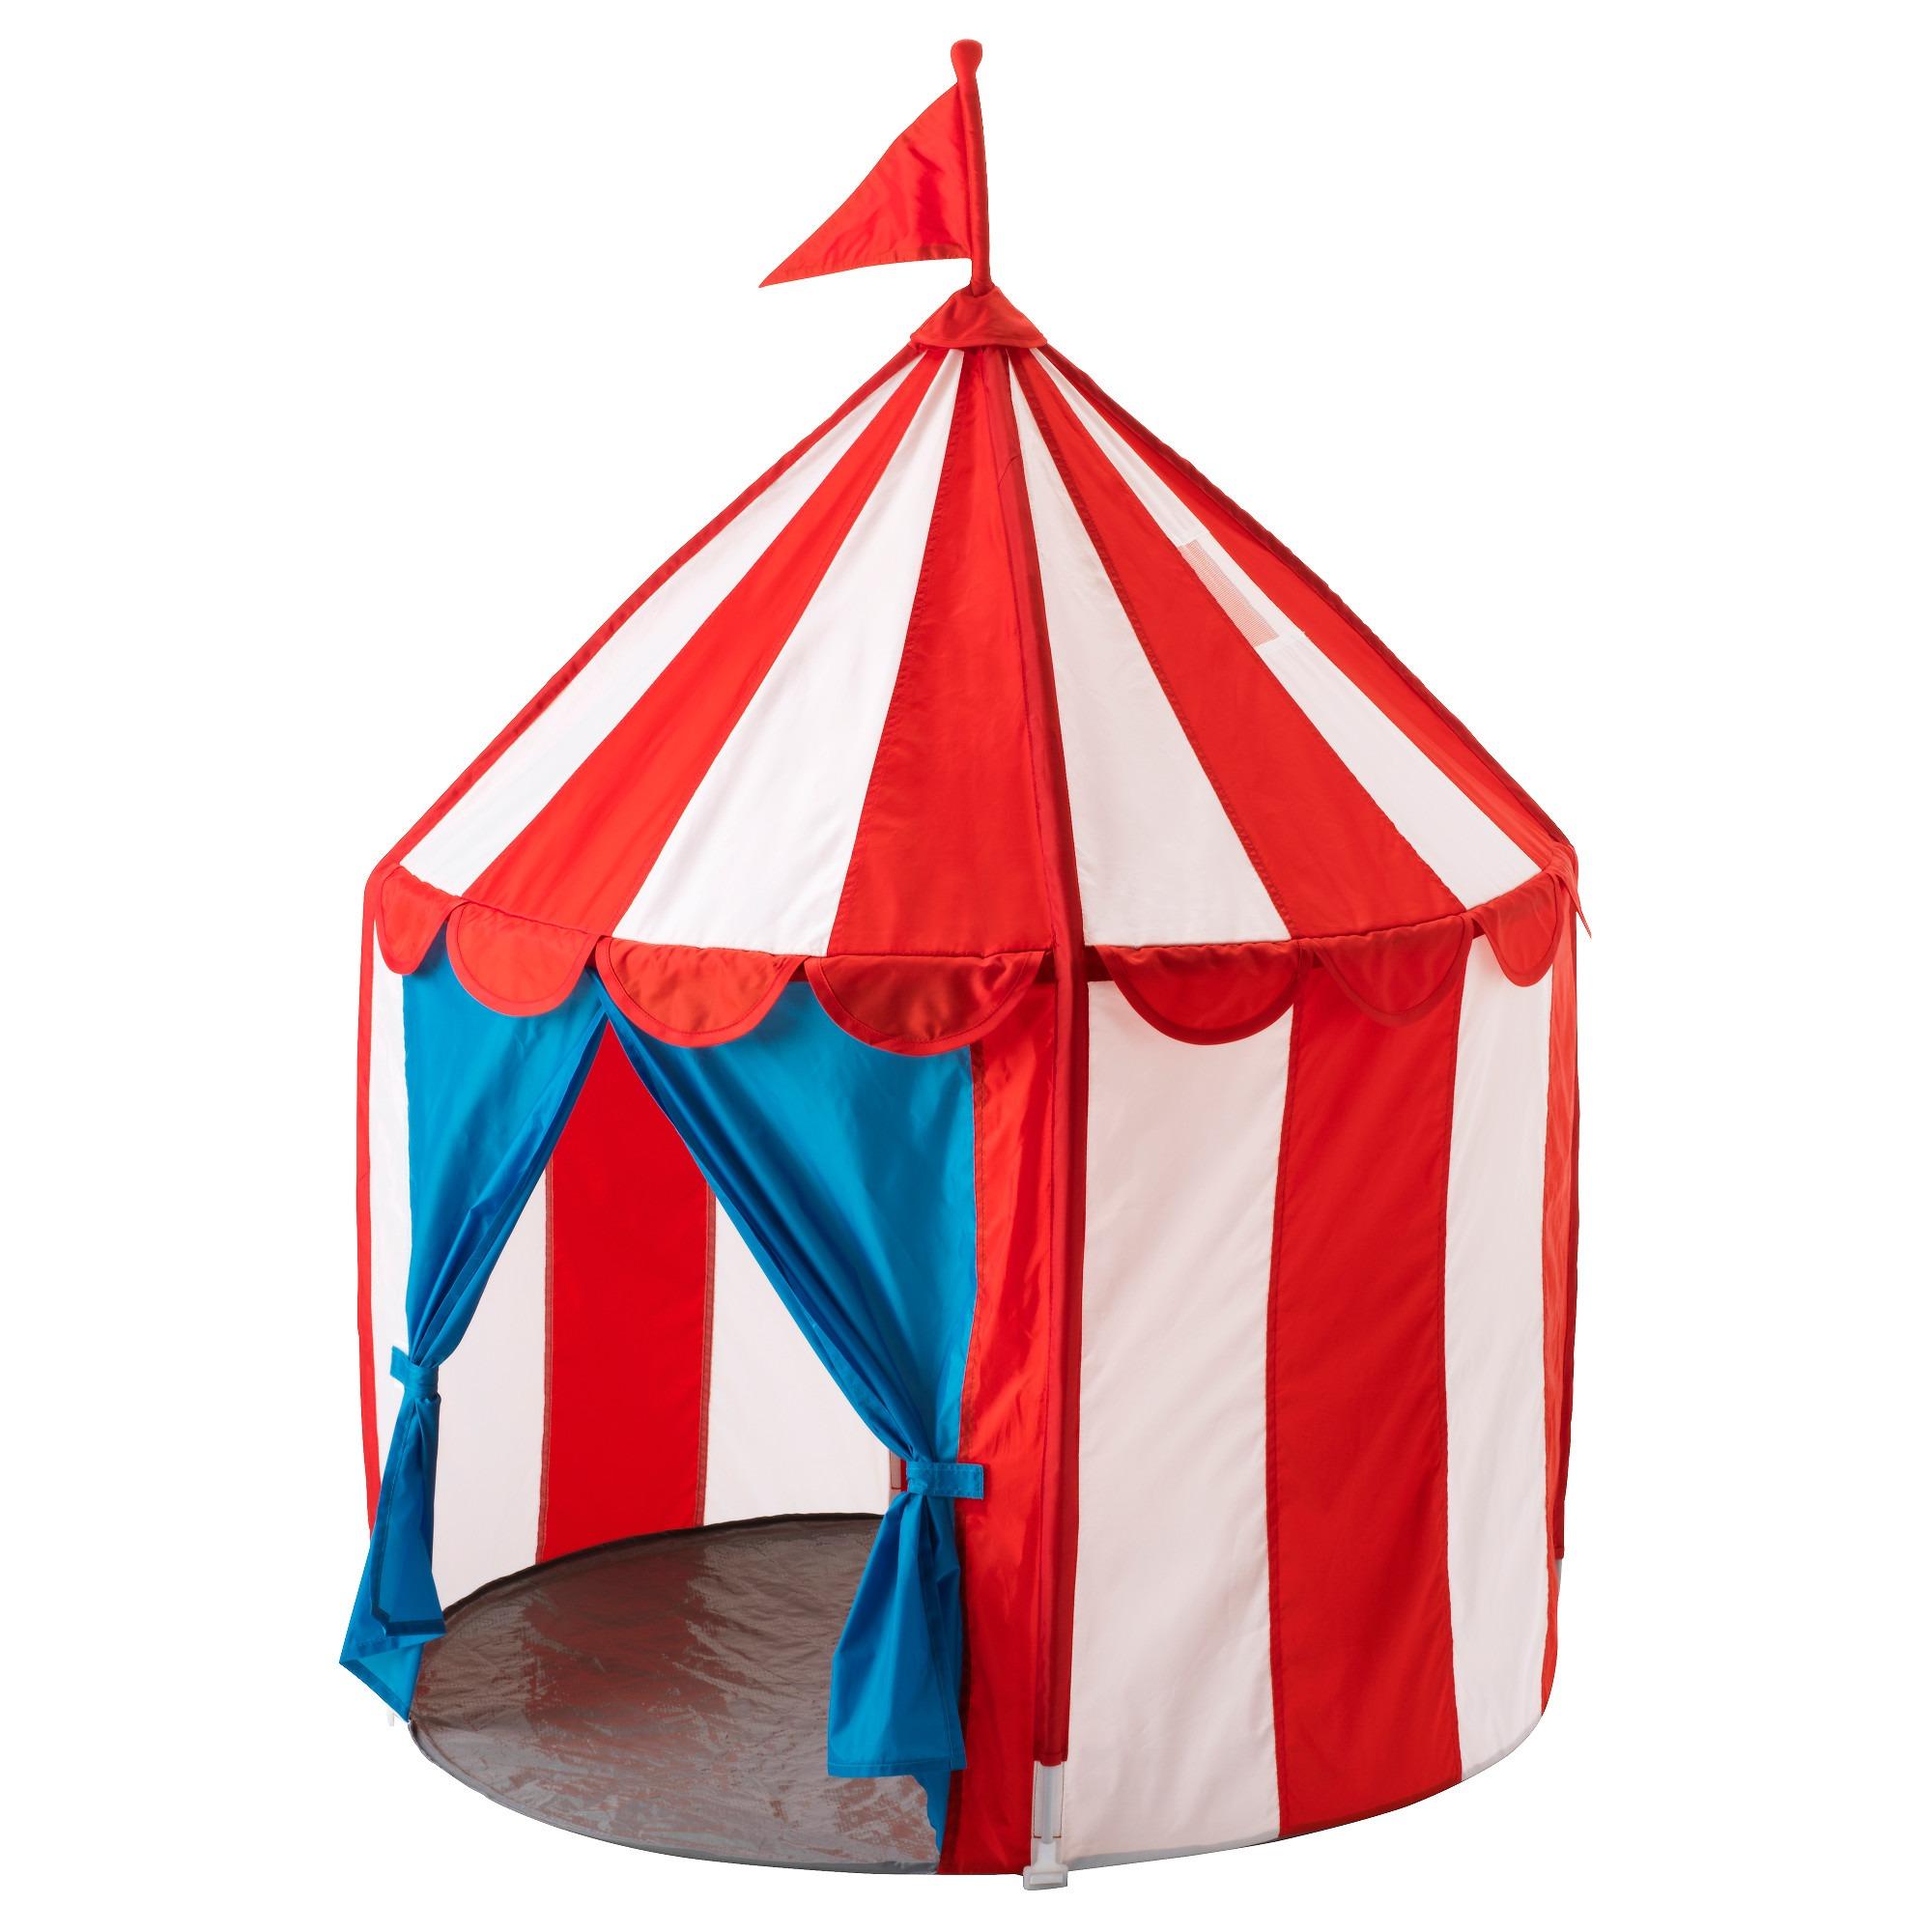 Tent Toy เต็นท์เด็ก บ้านของเล่น เสริมพัฒนาการ